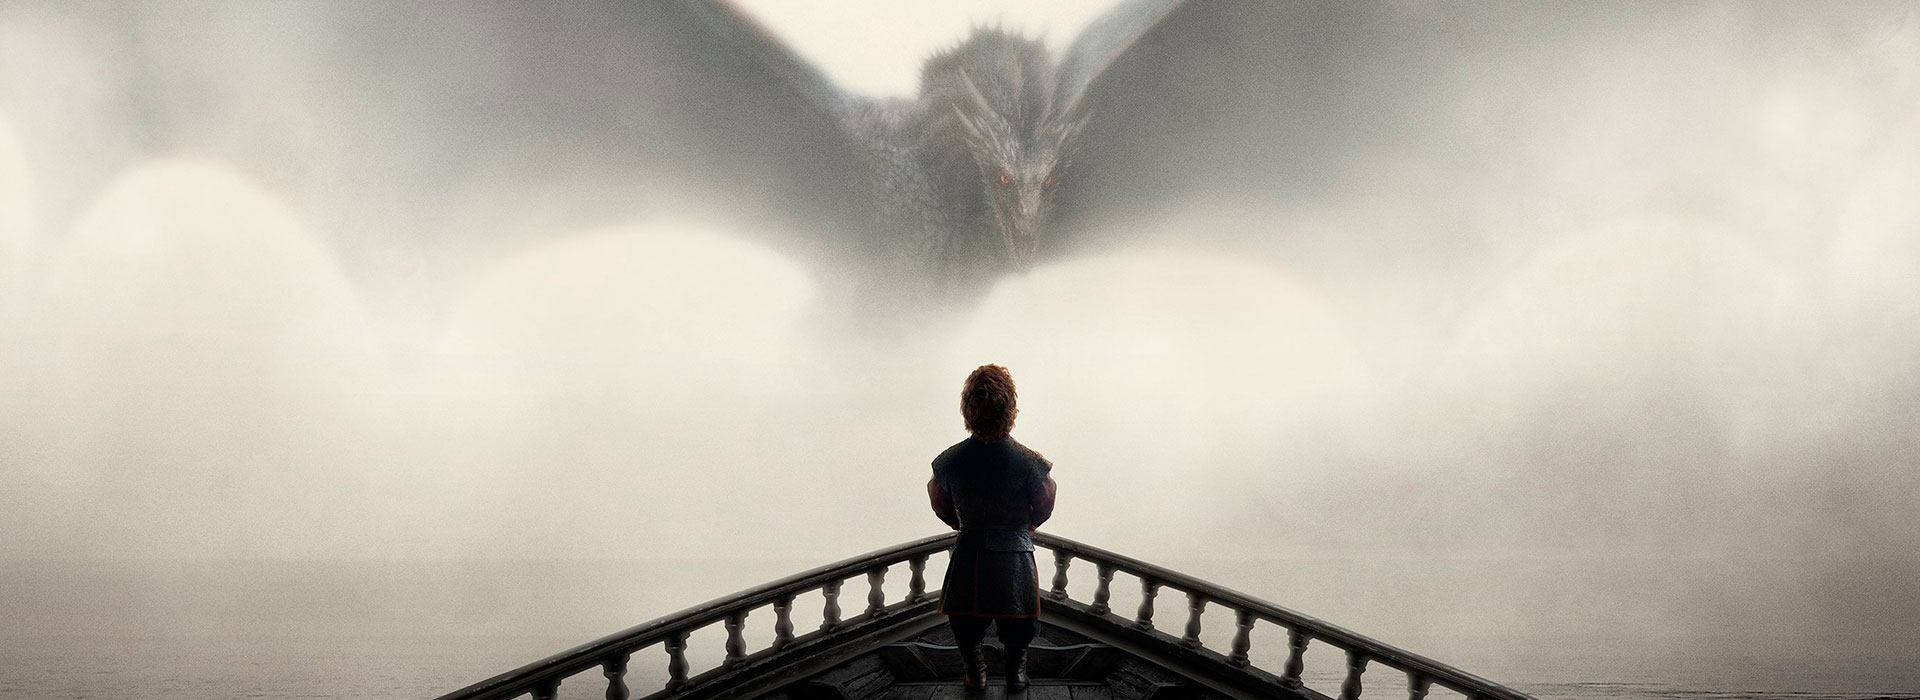 Game Of Thrones Season 8 Tyrion Dragon